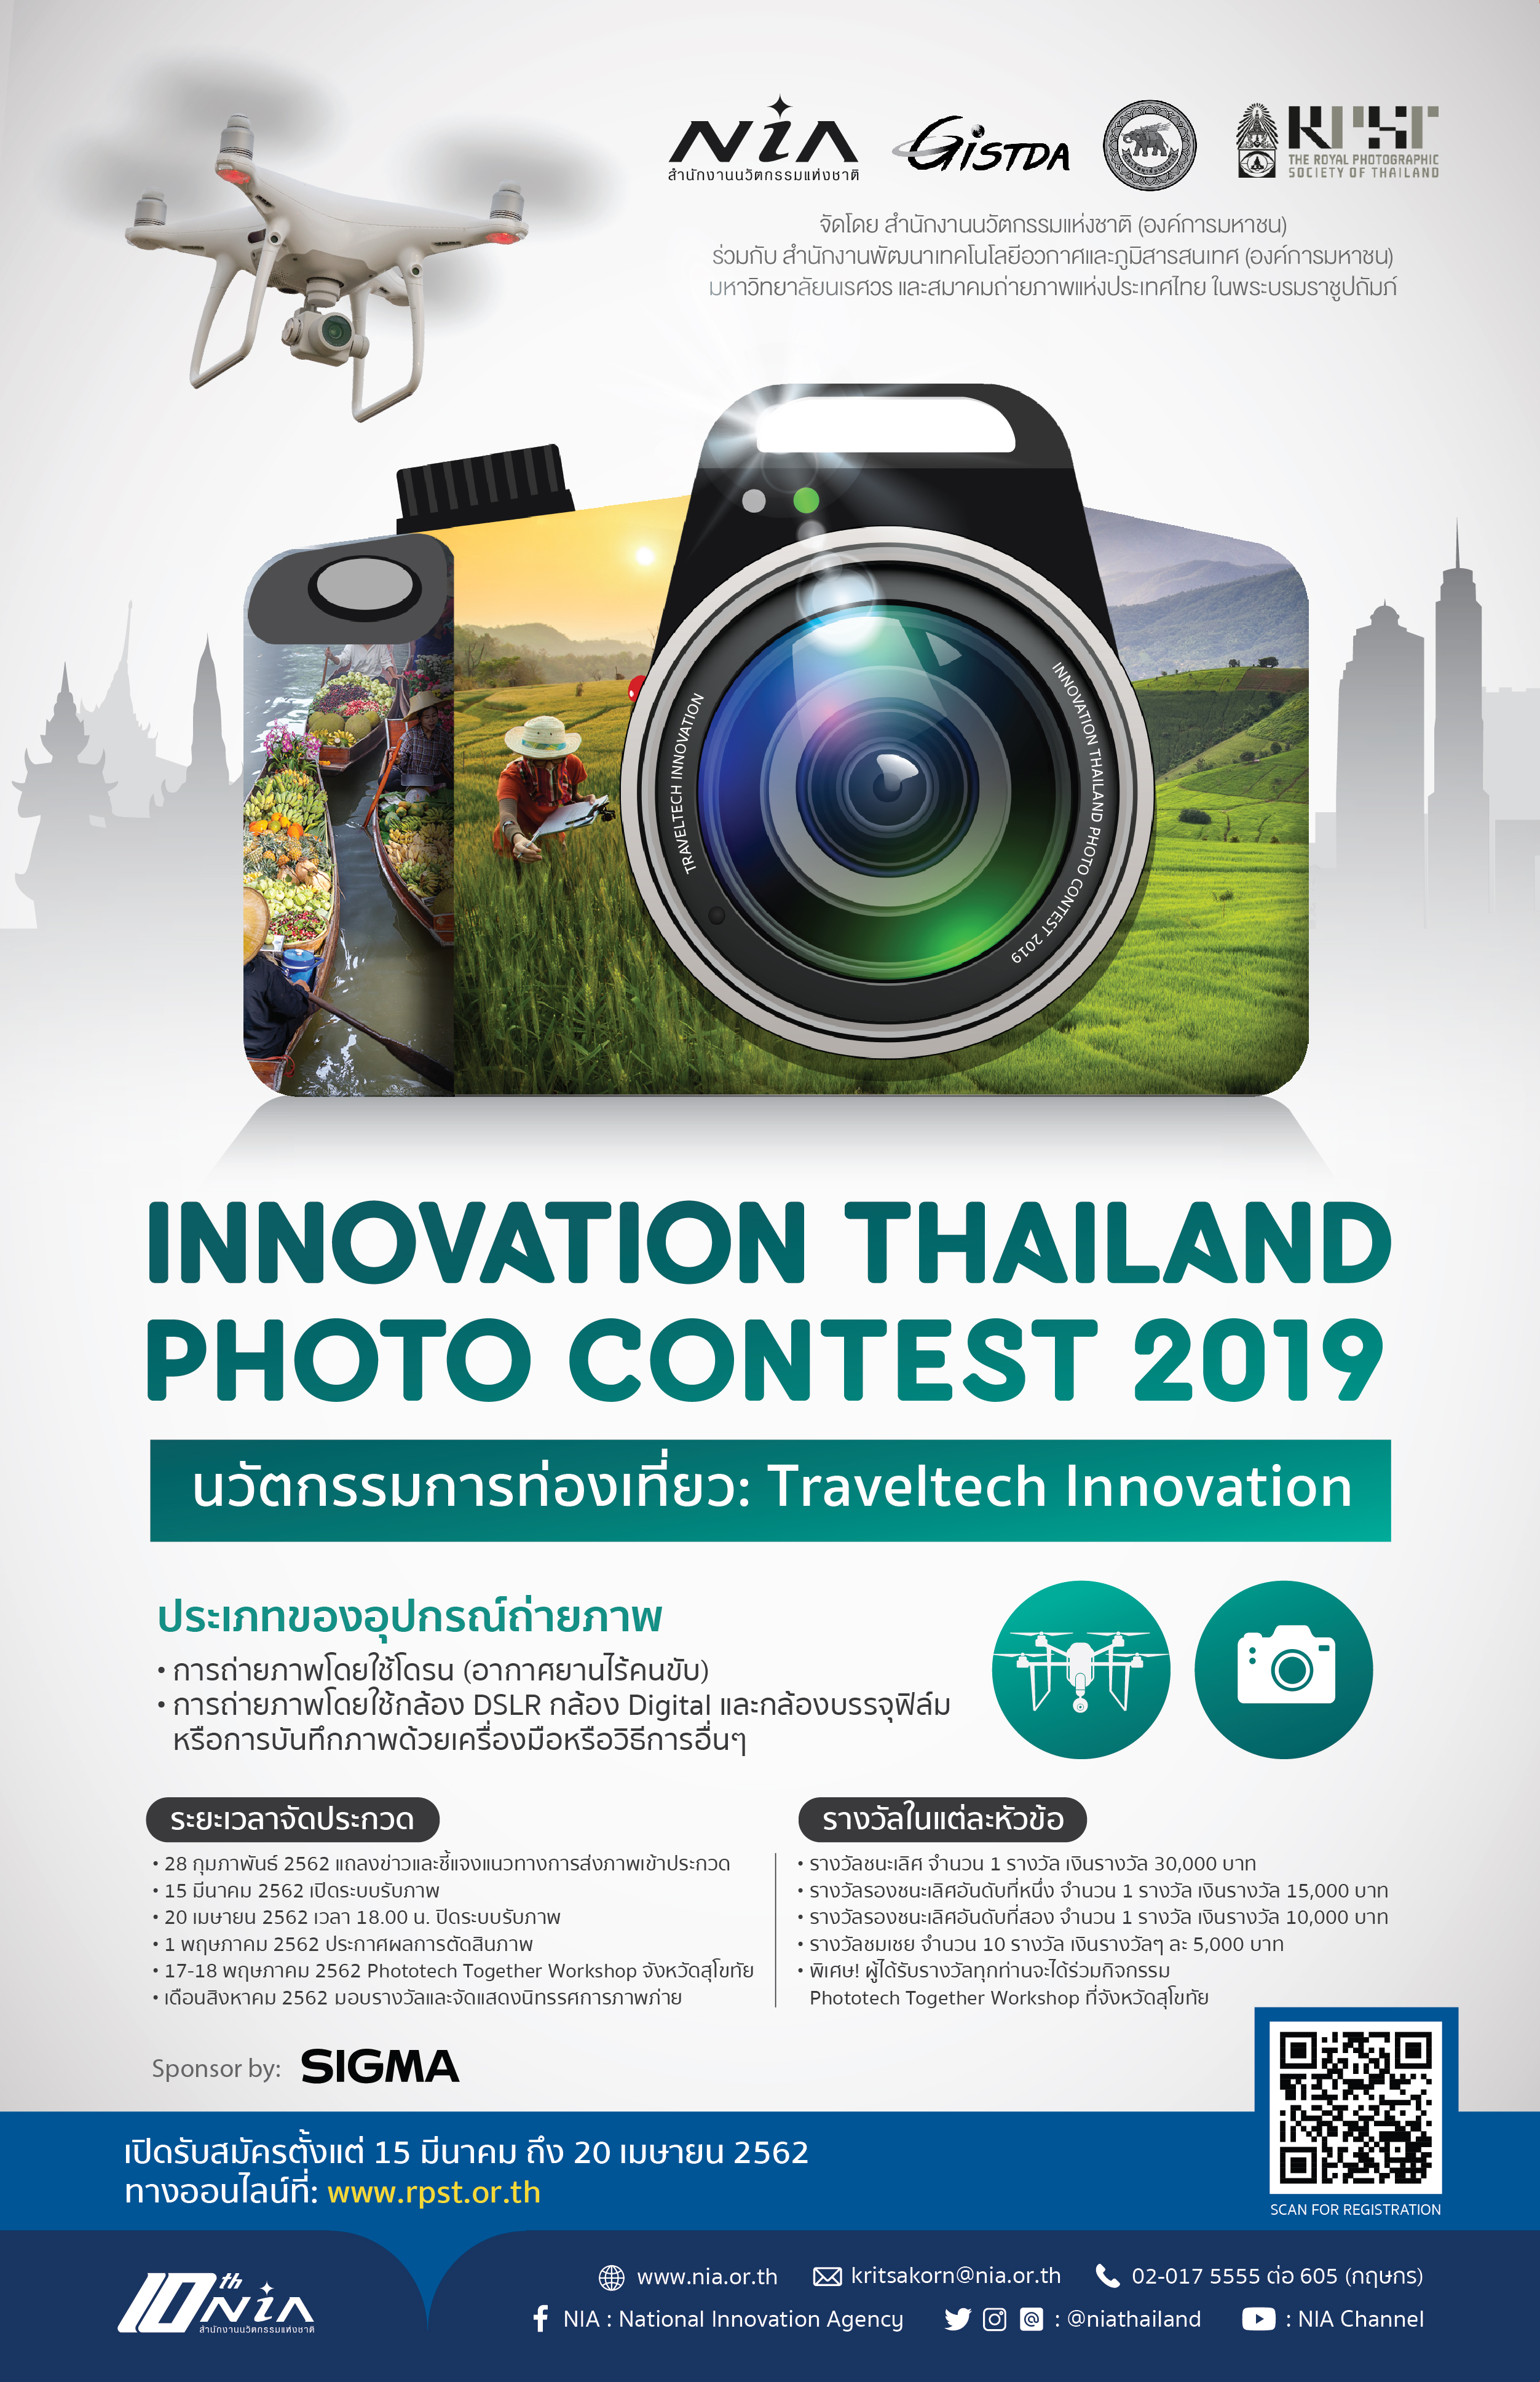 Innovative Thailand Photo Contest 2019